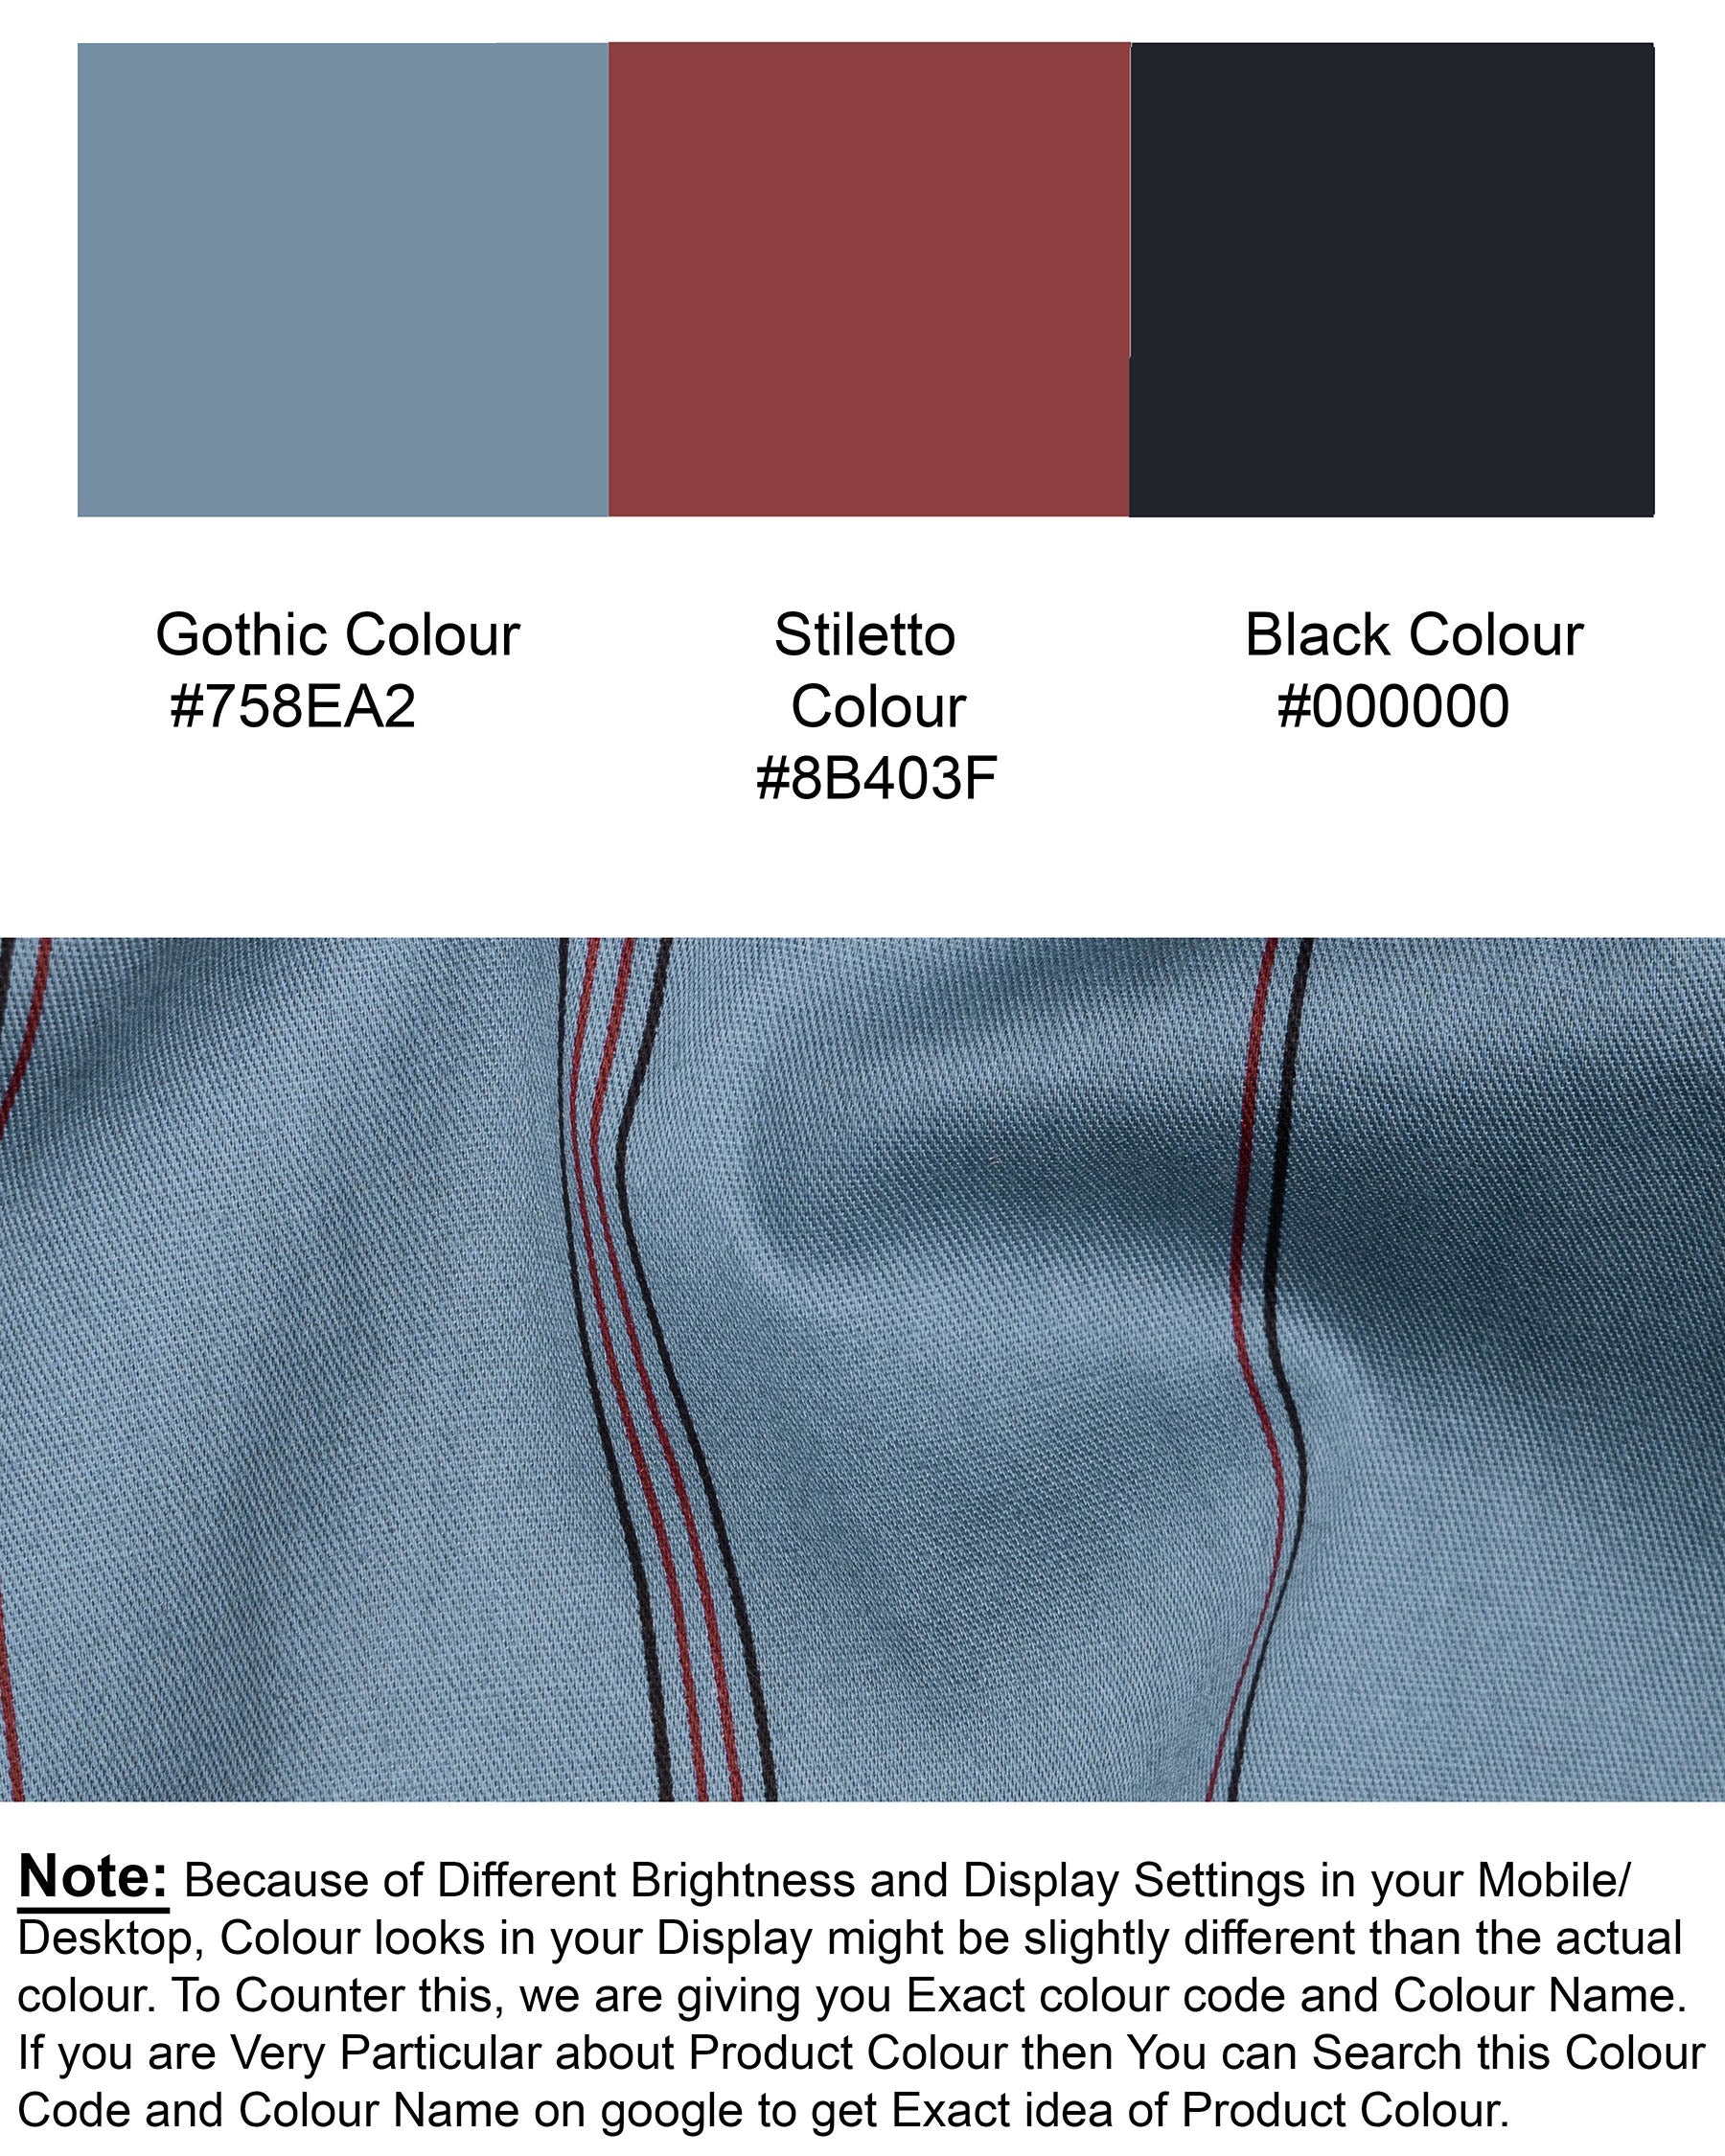 Gothic Grey Striped Royal Oxford Shirt 5983-38, 5983-H-38, 5983-39, 5983-H-39, 5983-40, 5983-H-40, 5983-42, 5983-H-42, 5983-44, 5983-H-44, 5983-46, 5983-H-46, 5983-48, 5983-H-48, 5983-50, 5983-H-50, 5983-52, 5983-H-52